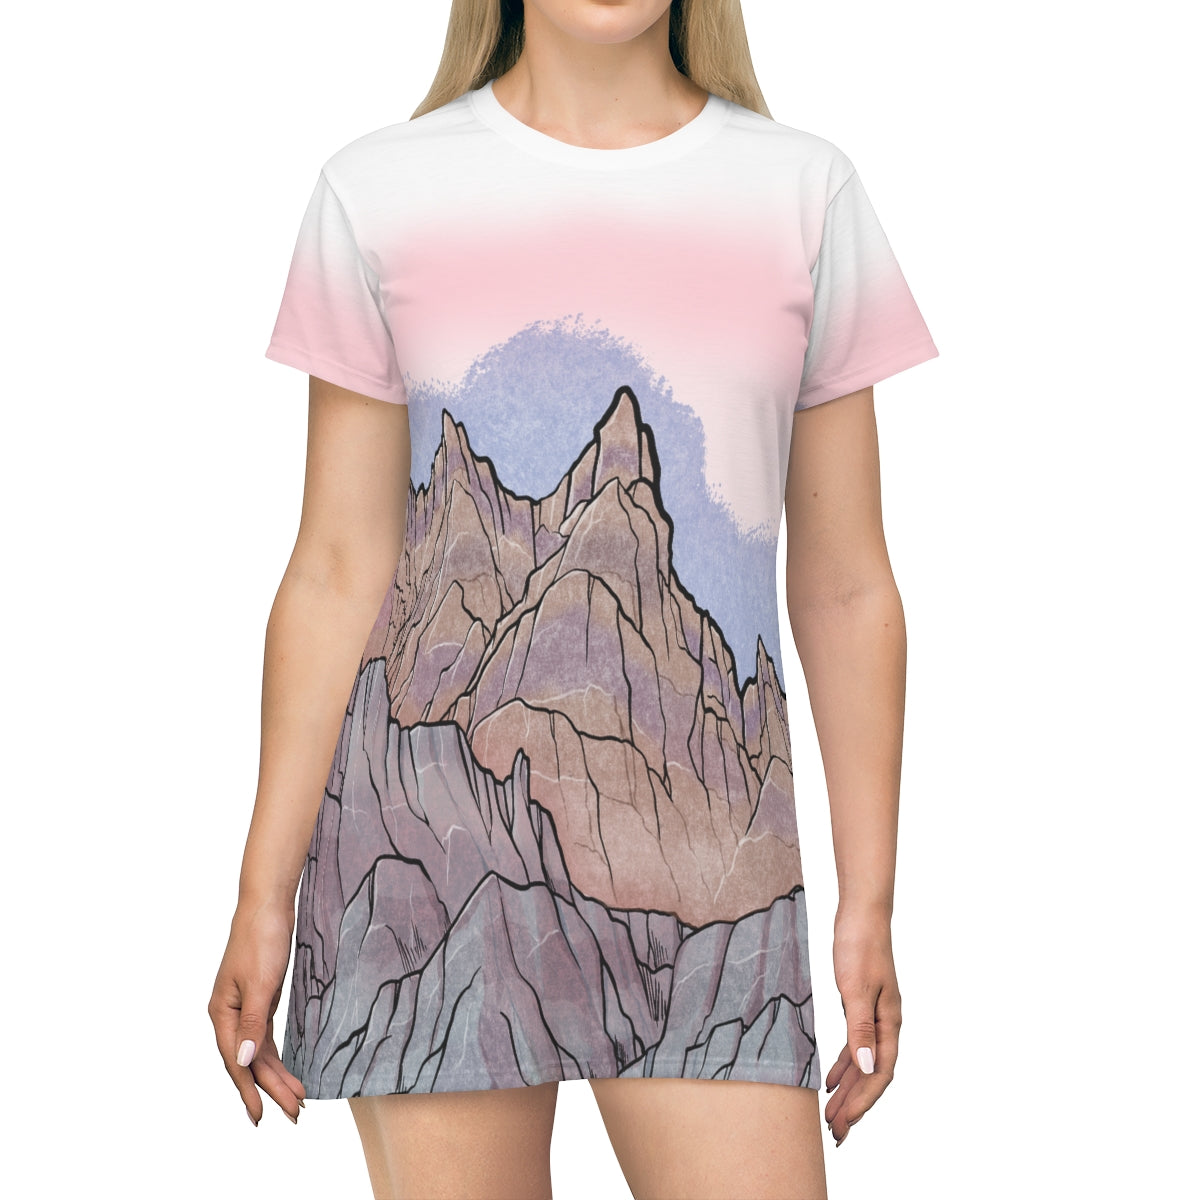 Sierra Bambino - All Over Print T-Shirt Dress